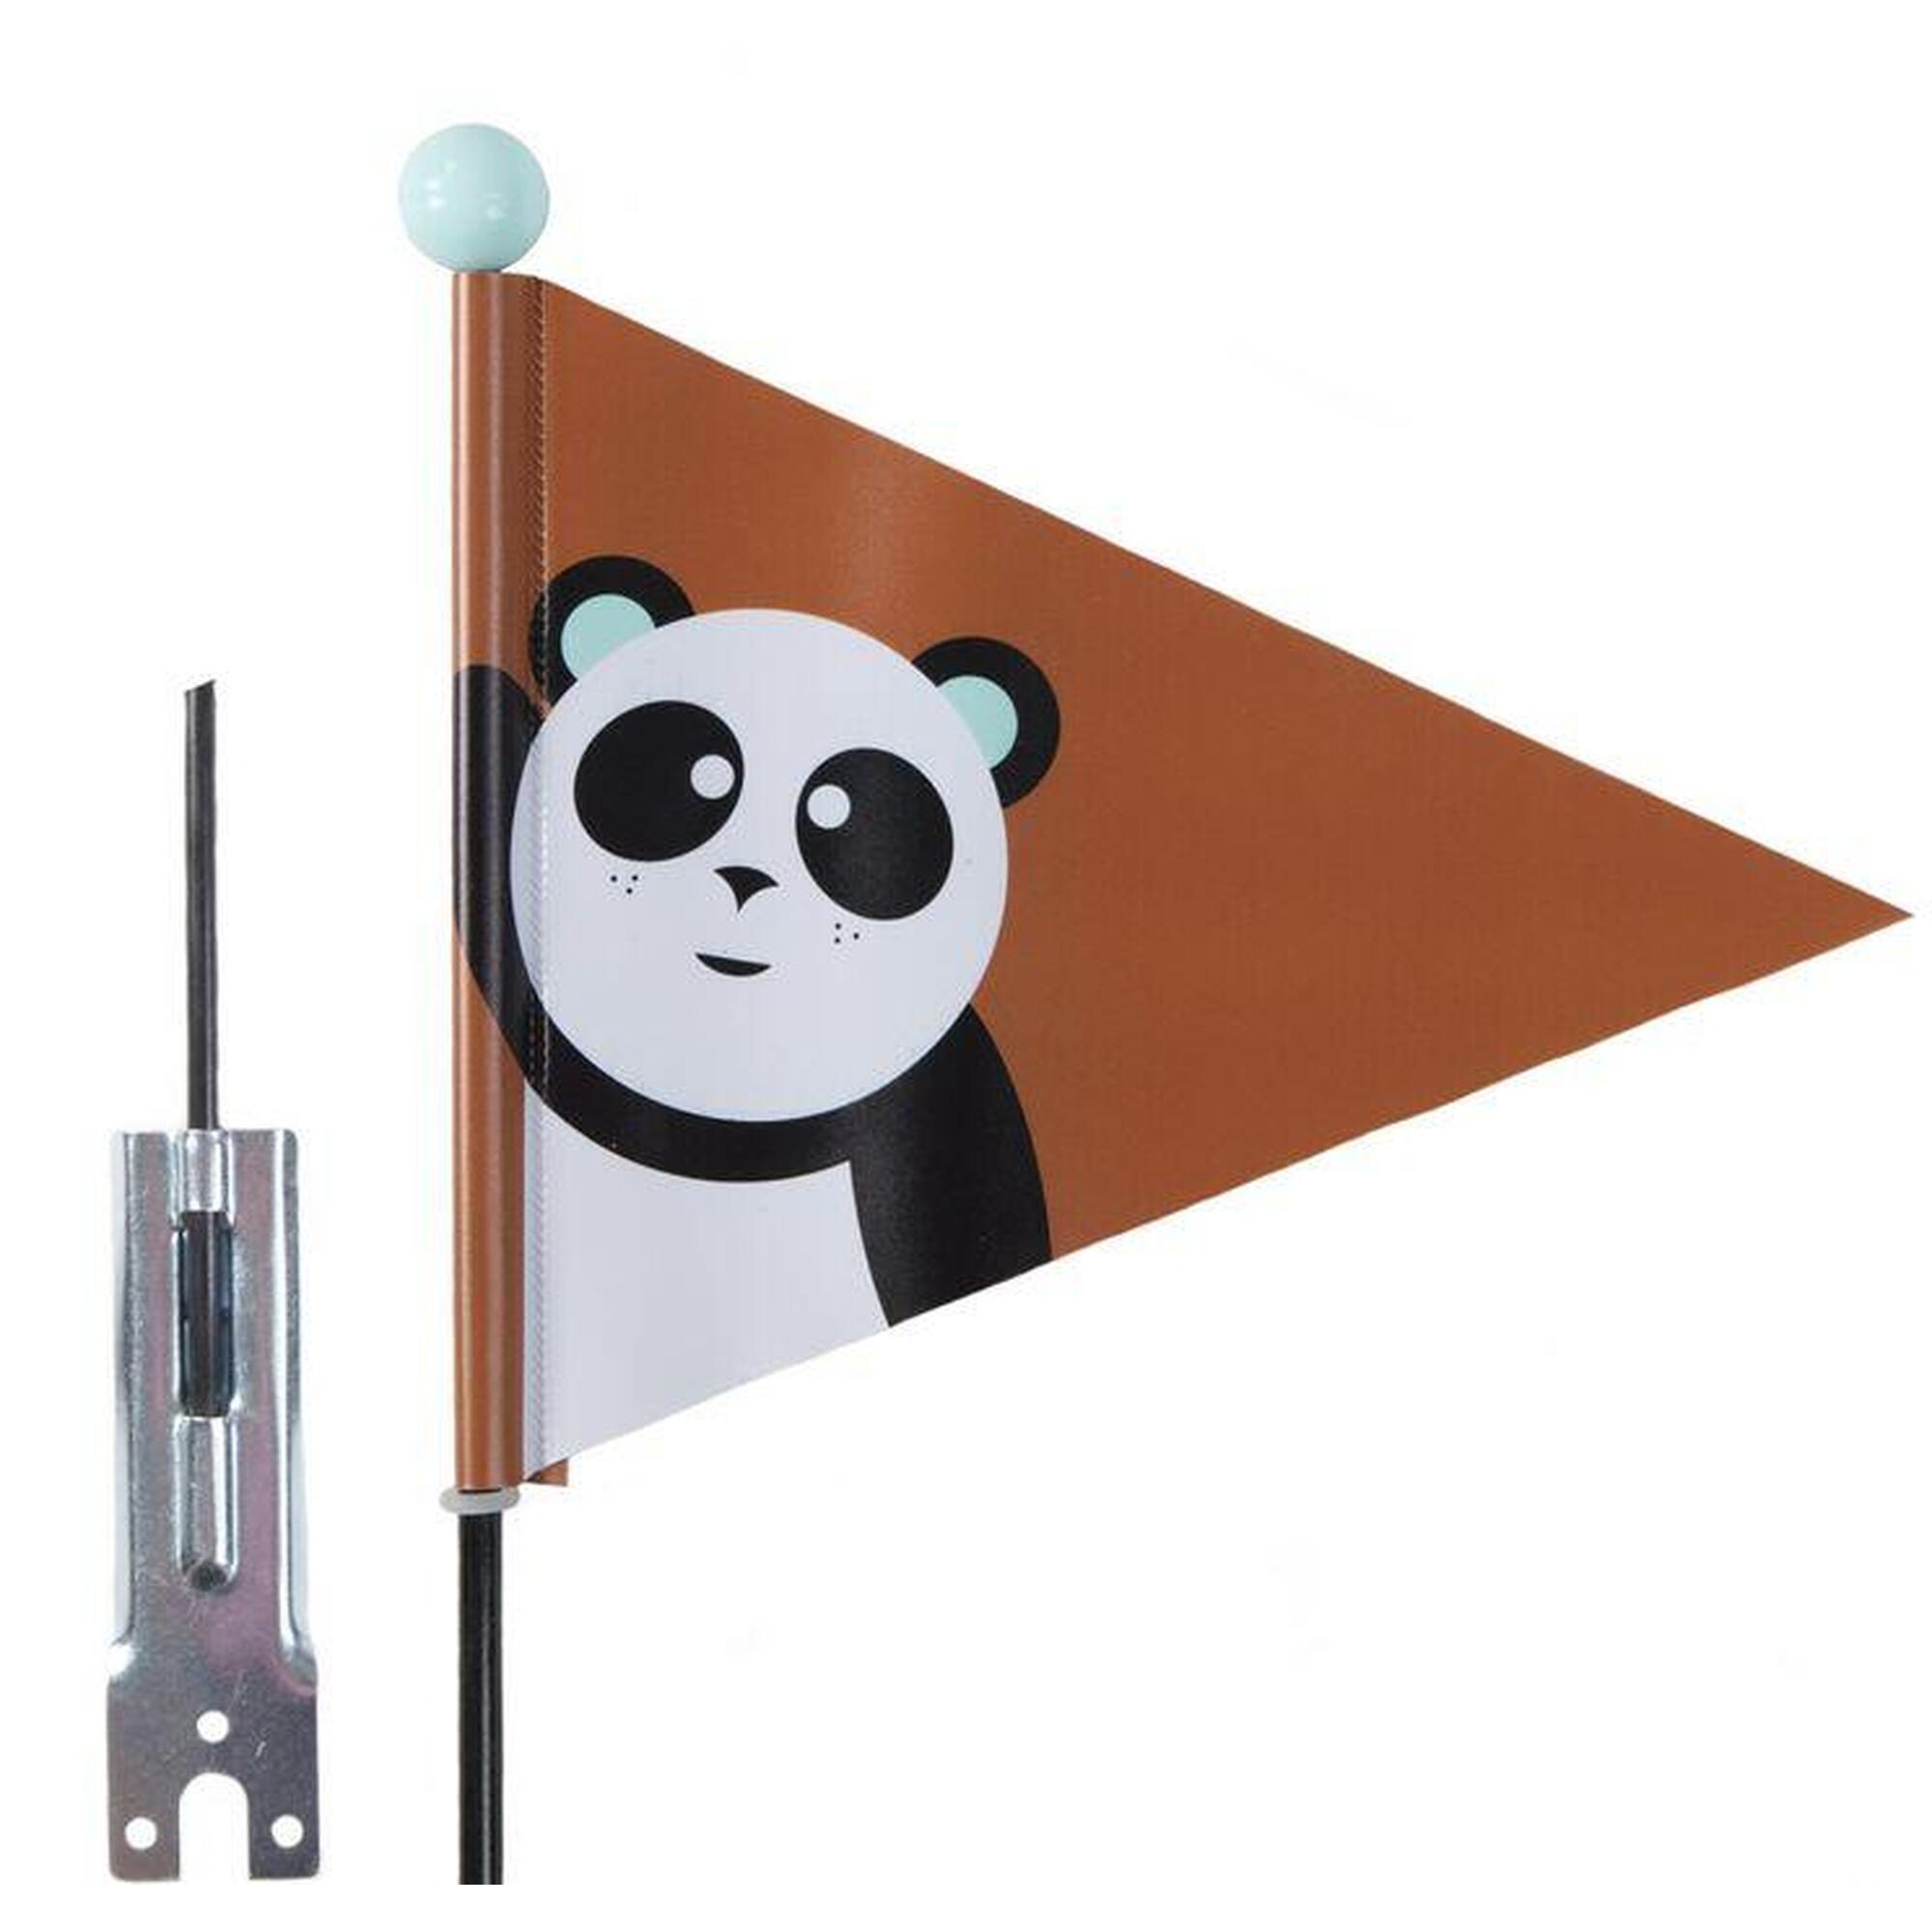 Beveiligingsvlag Pexkids Panda Braun met een Panda -print